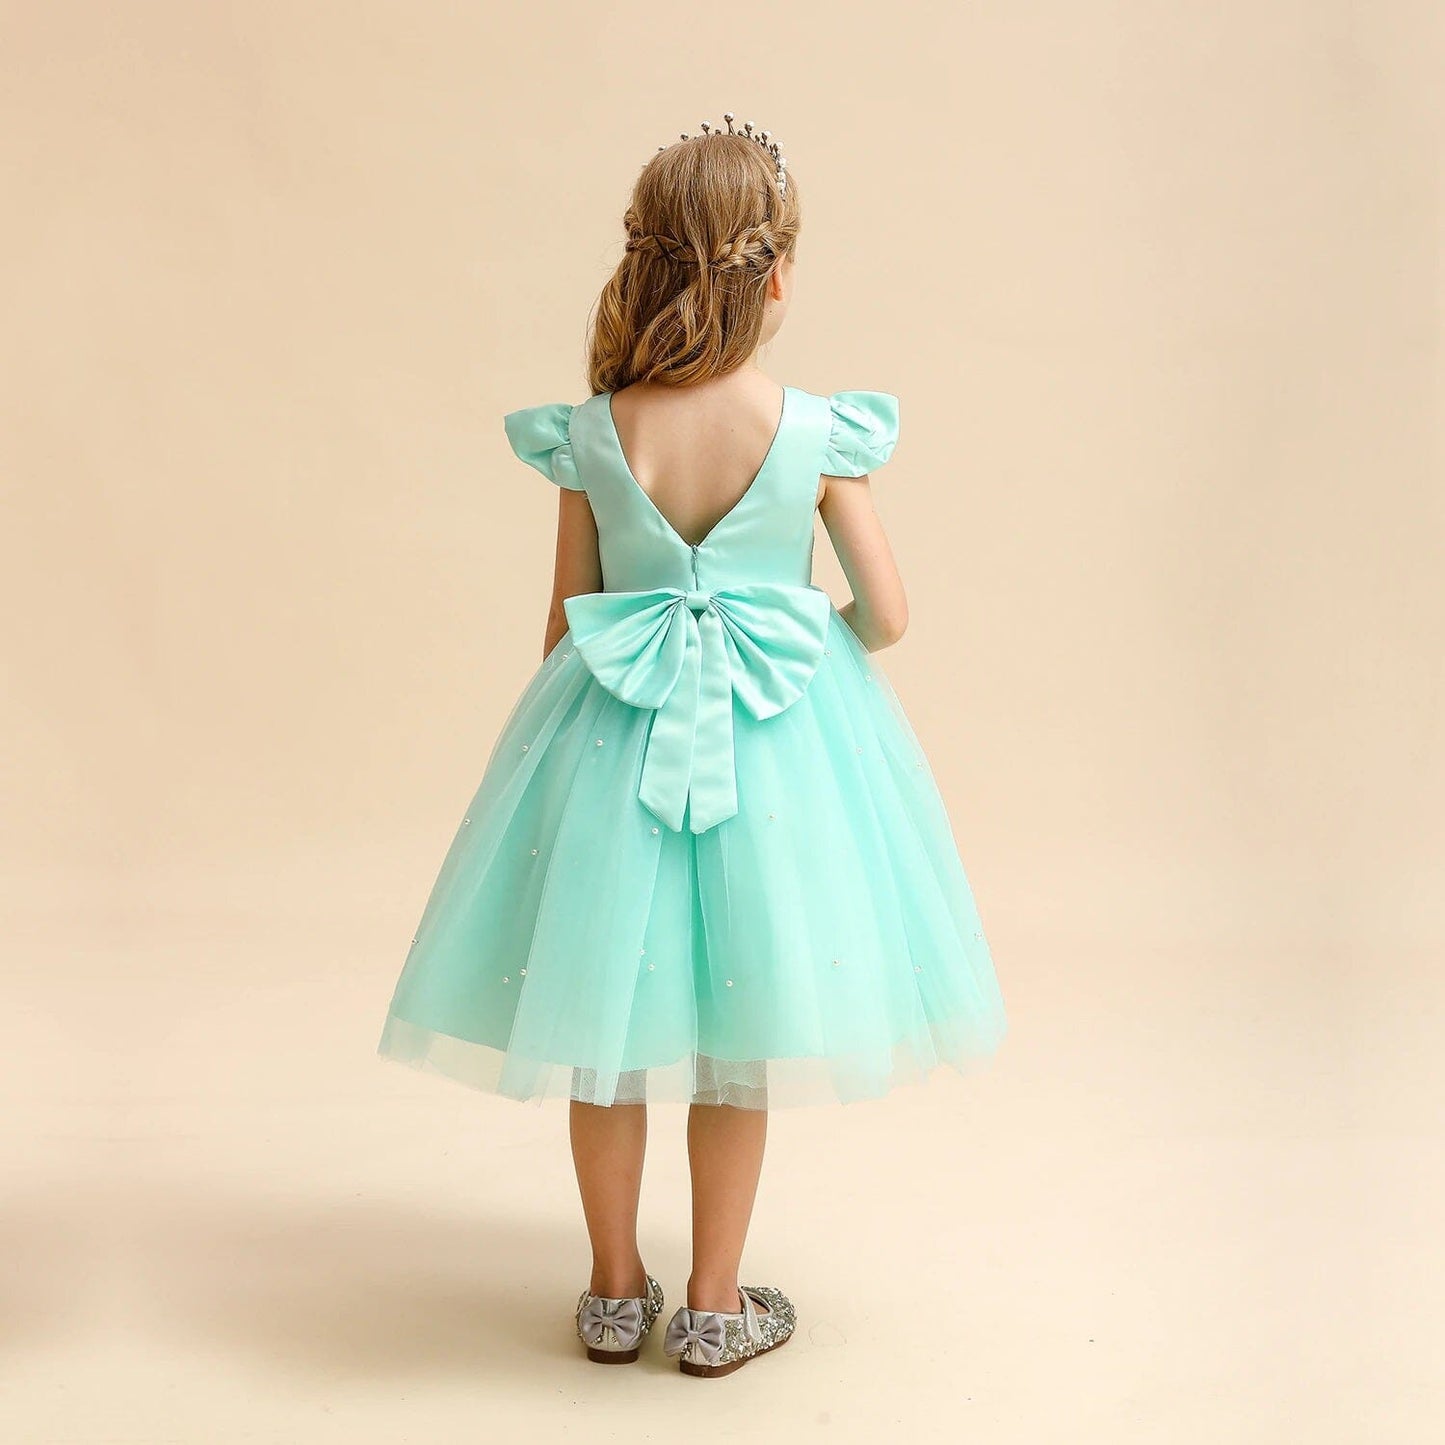 Girls Children Toddler Ruffle Sleeveless Big Bow Princess Tulle Sundress girls dress jehouze Green01 6M 